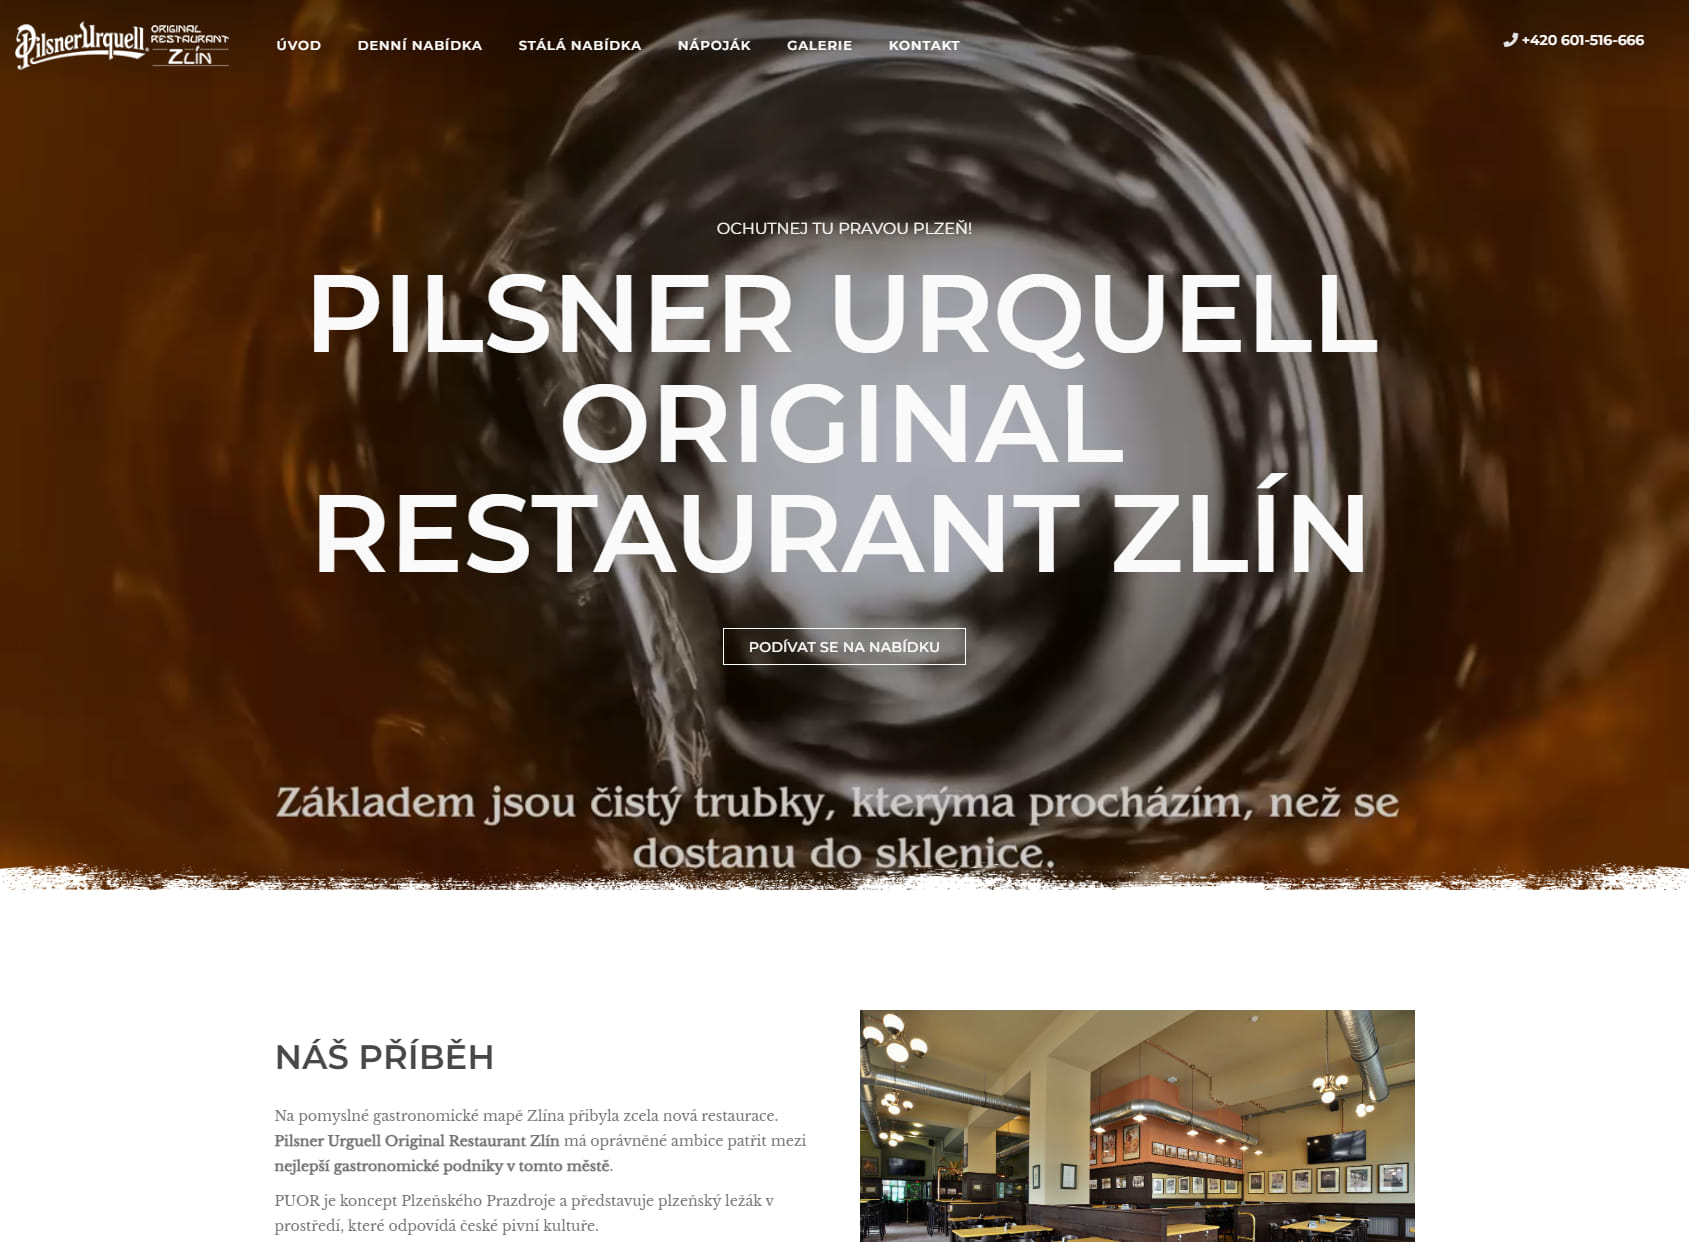 Pilsner Urquell Original Restaurant